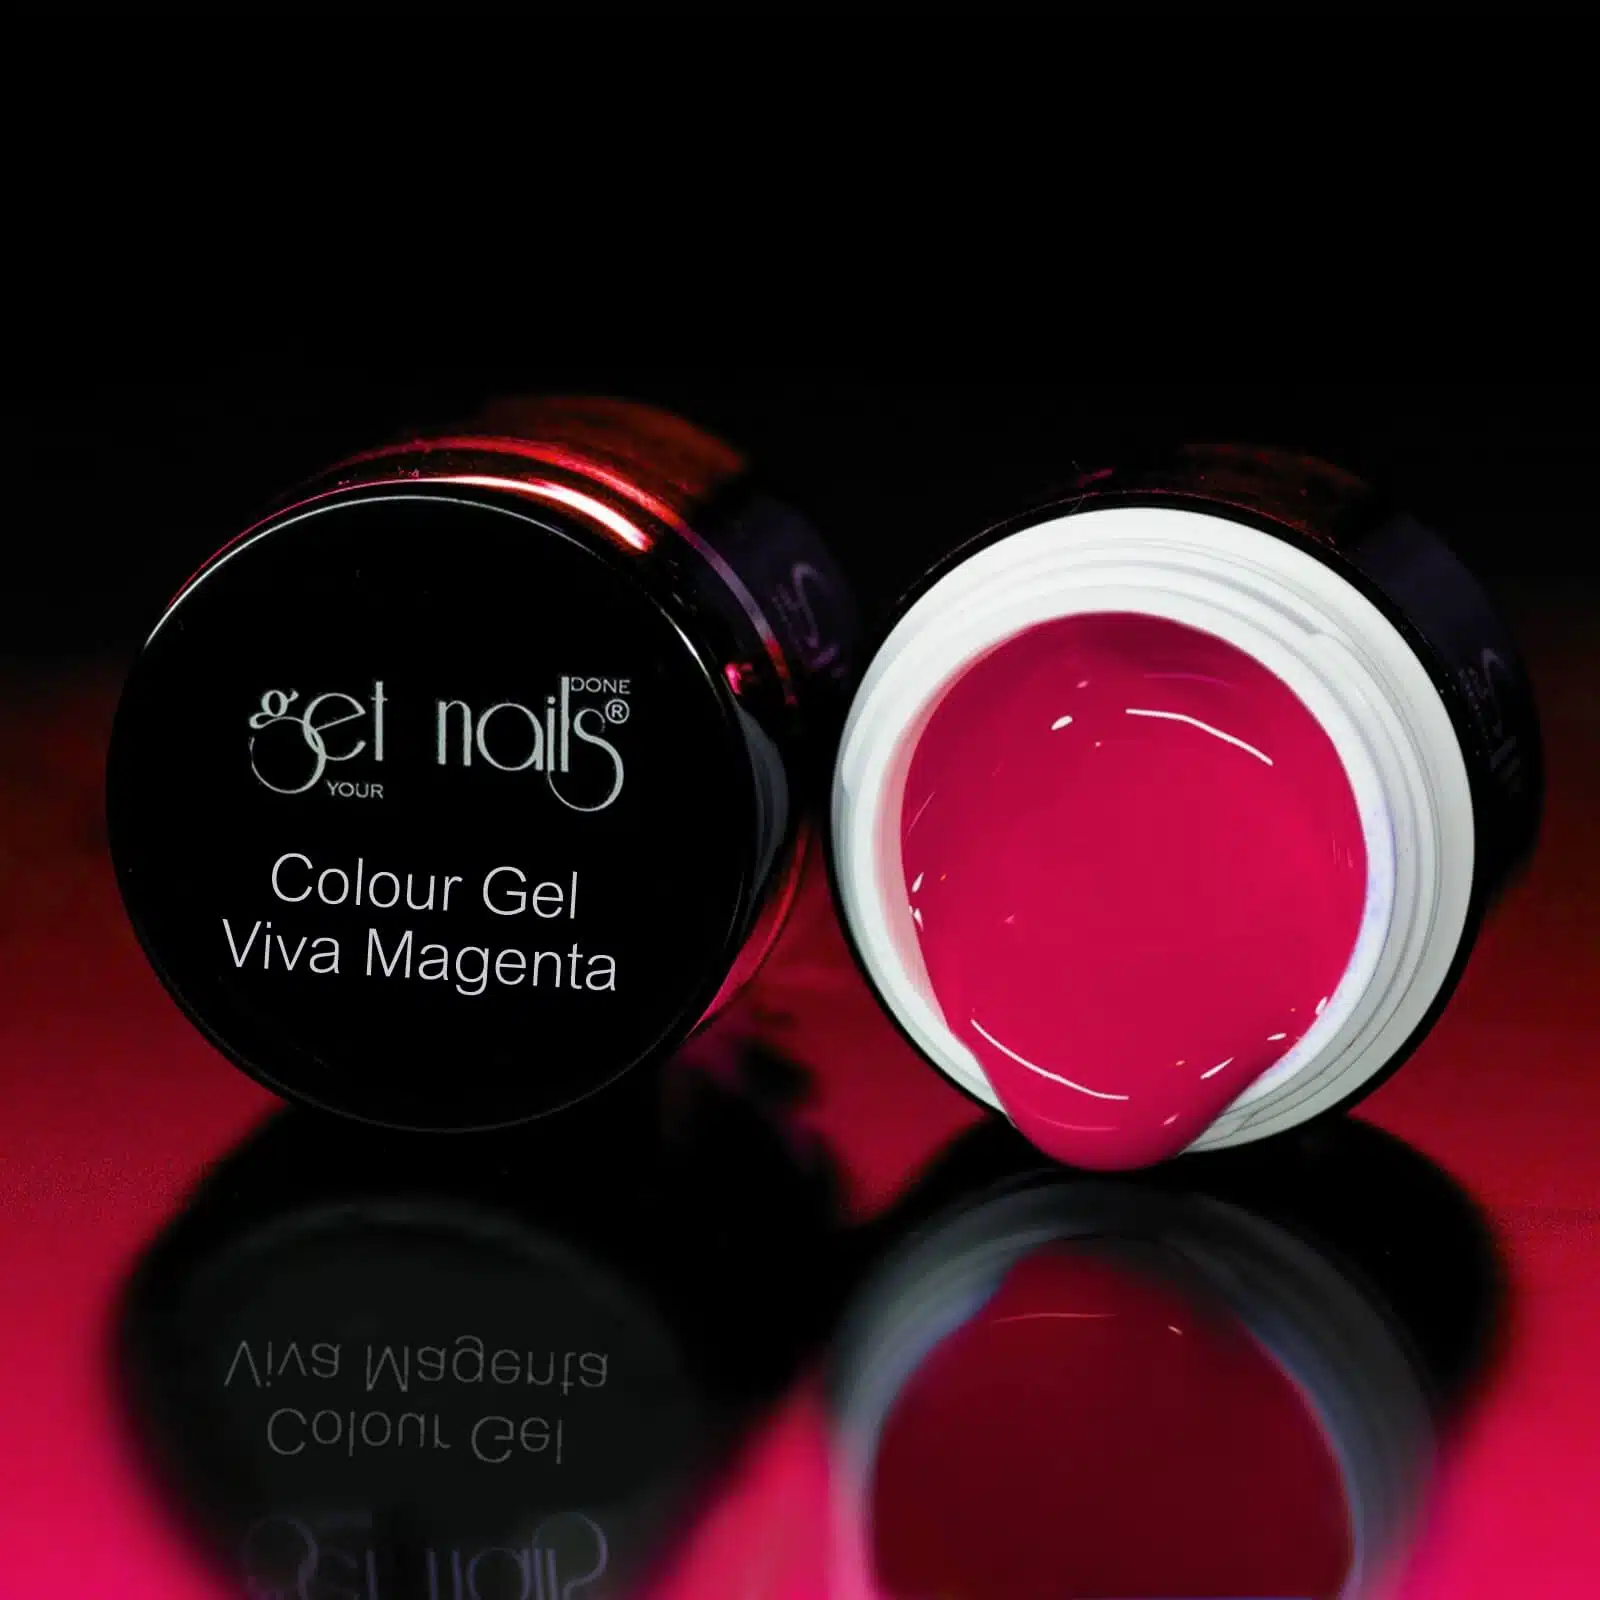 Get Nails Austria - Color Gel Viva Magenta 5g 2